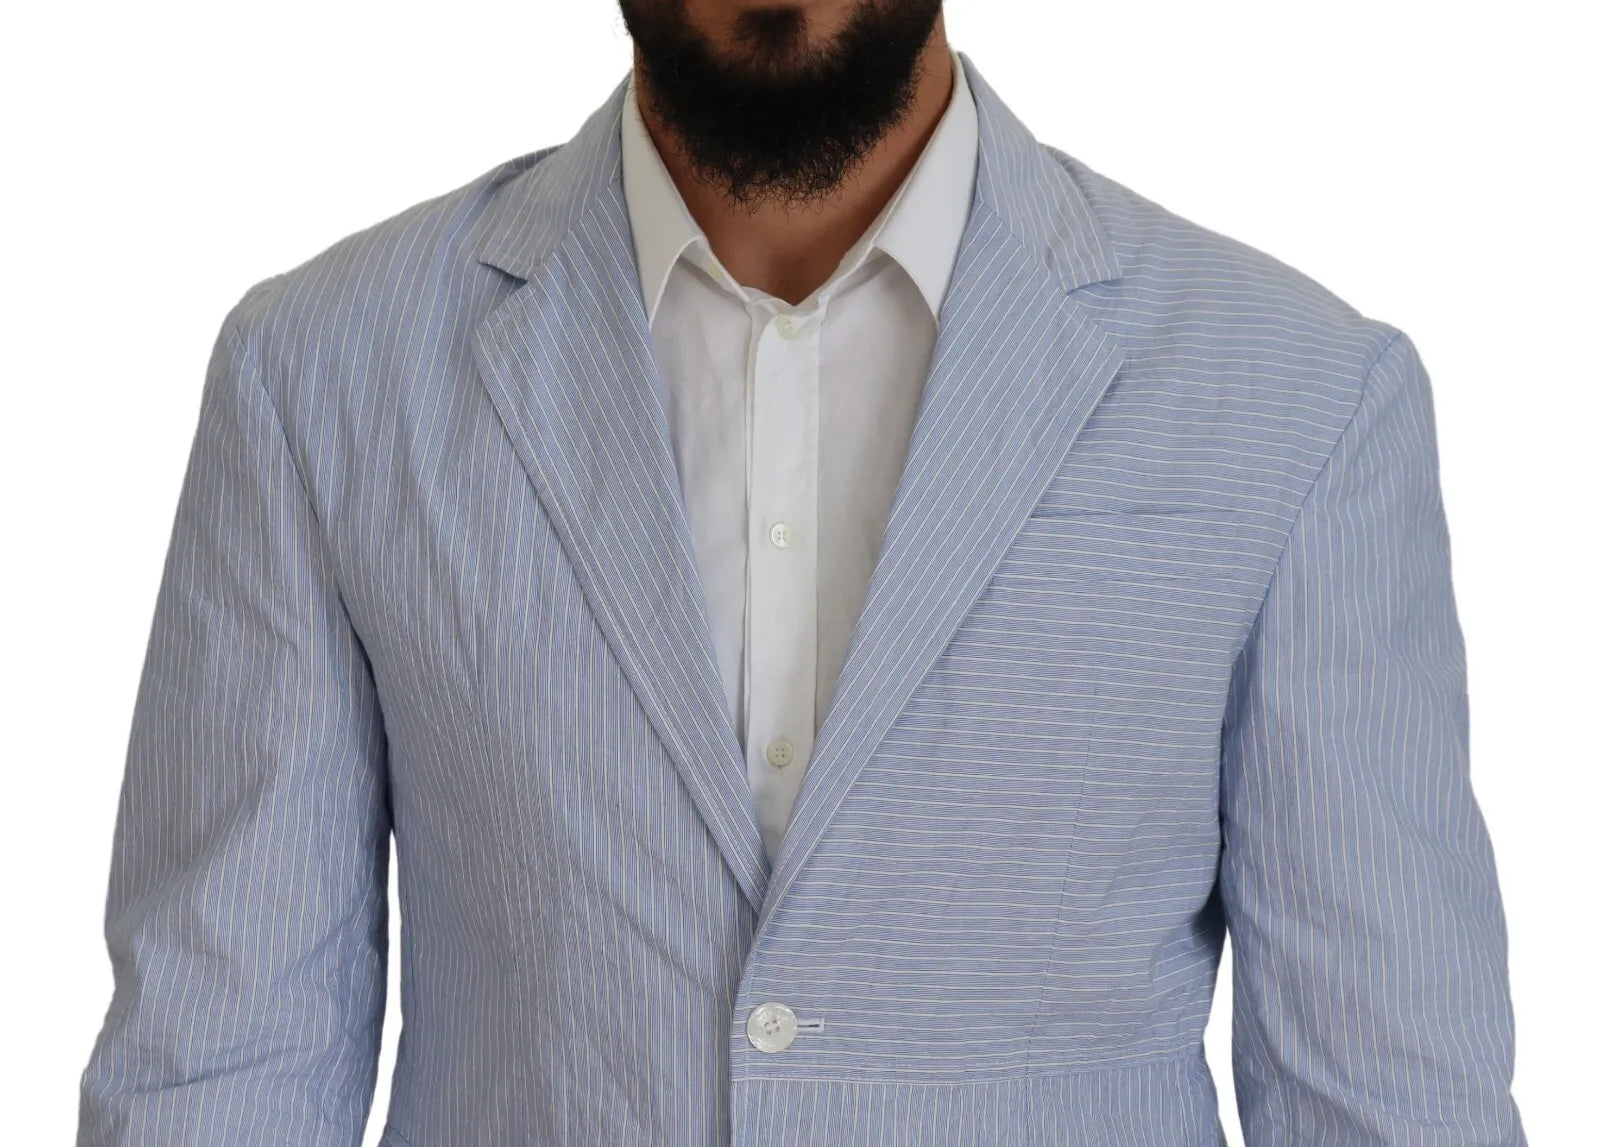 Dsquared² Blue Striped Single Breasted Formal Coat Blazer